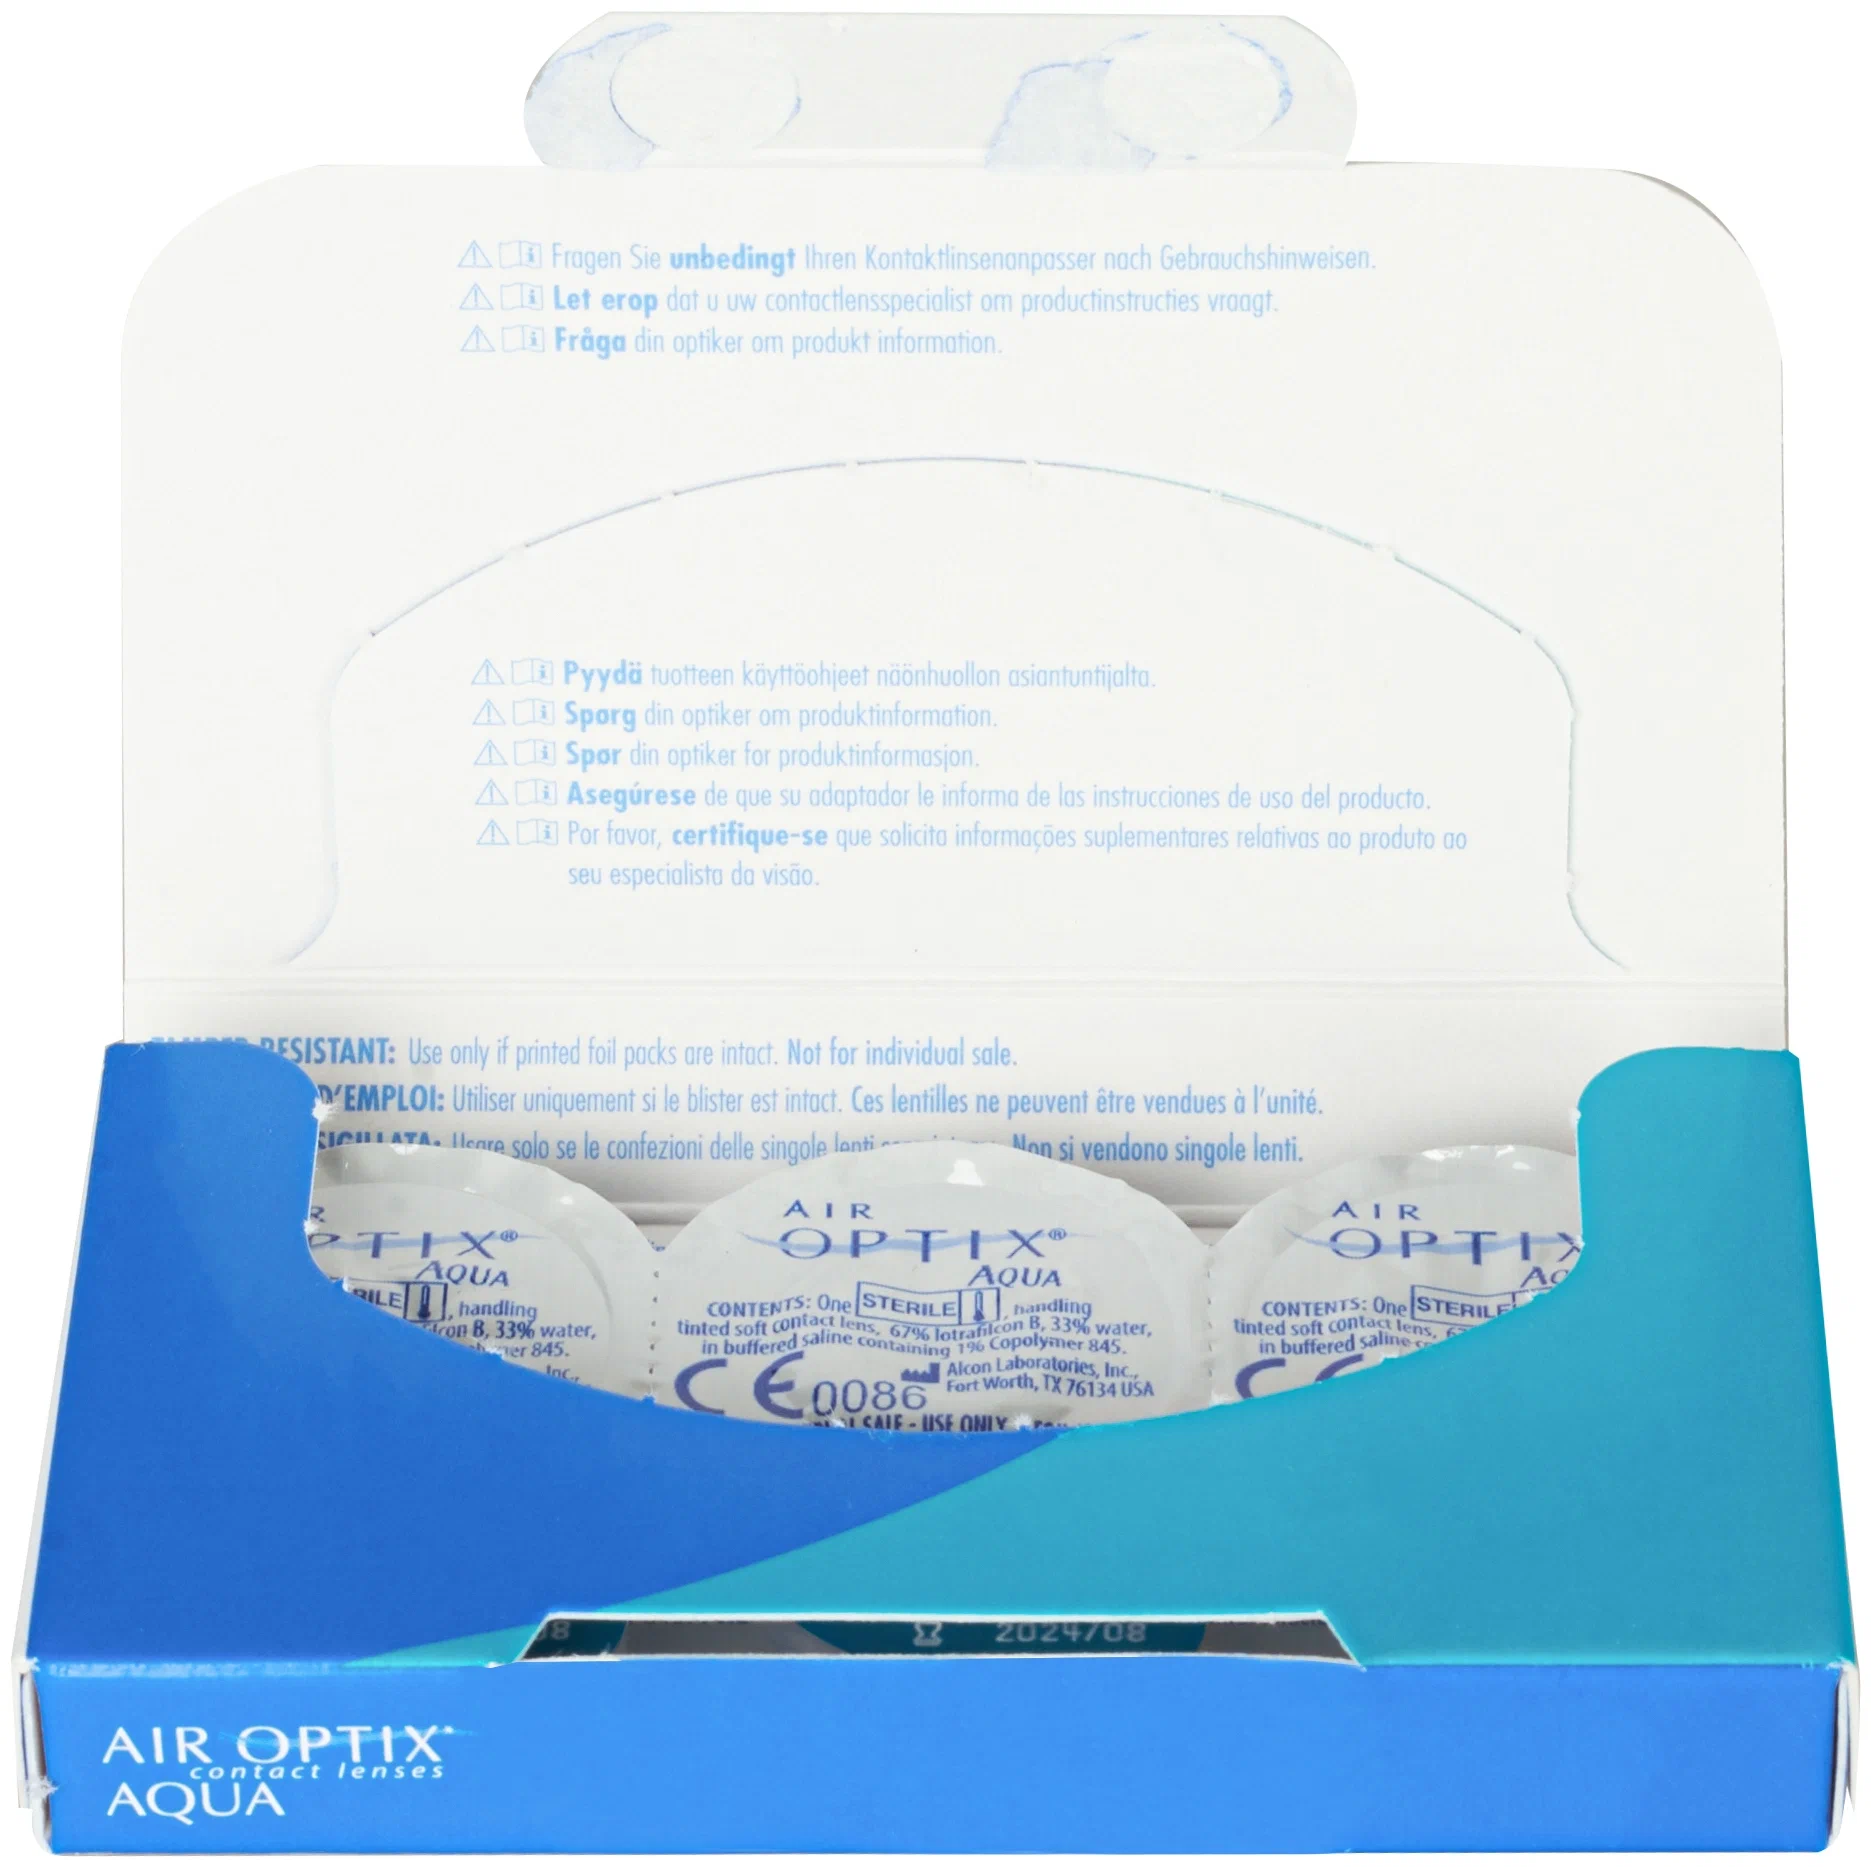 Air Optix (Alcon) Aqua, 6 шт. - кислородопроницаемость: 138 Dk/t